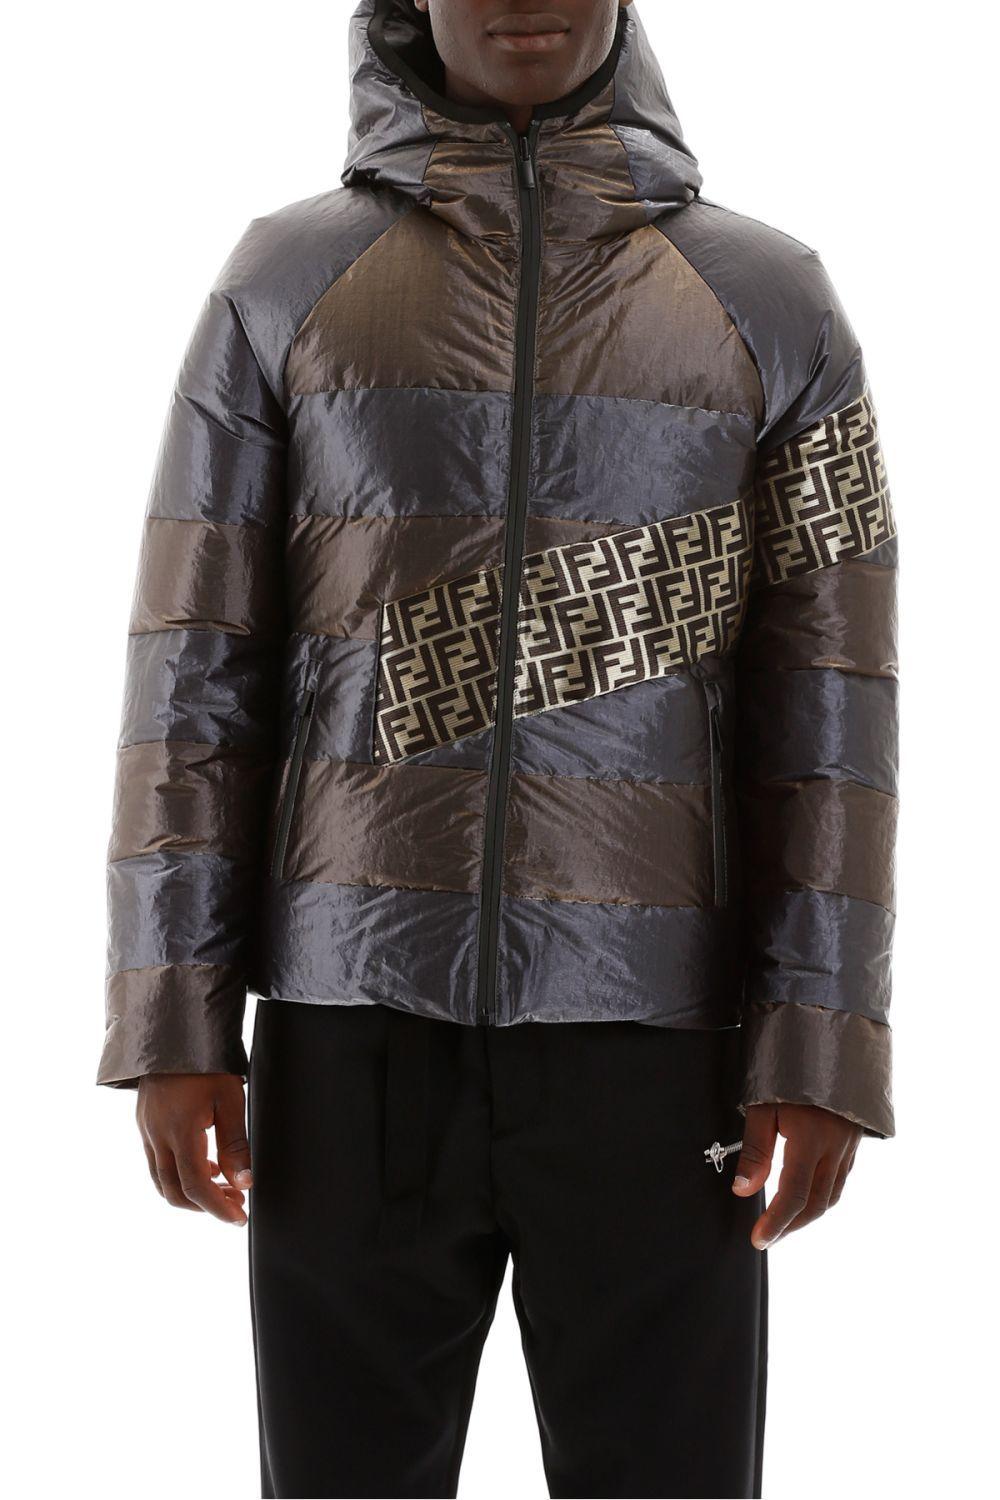 Fendi Synthetic Reversible Puffer Jacket for Men - Lyst